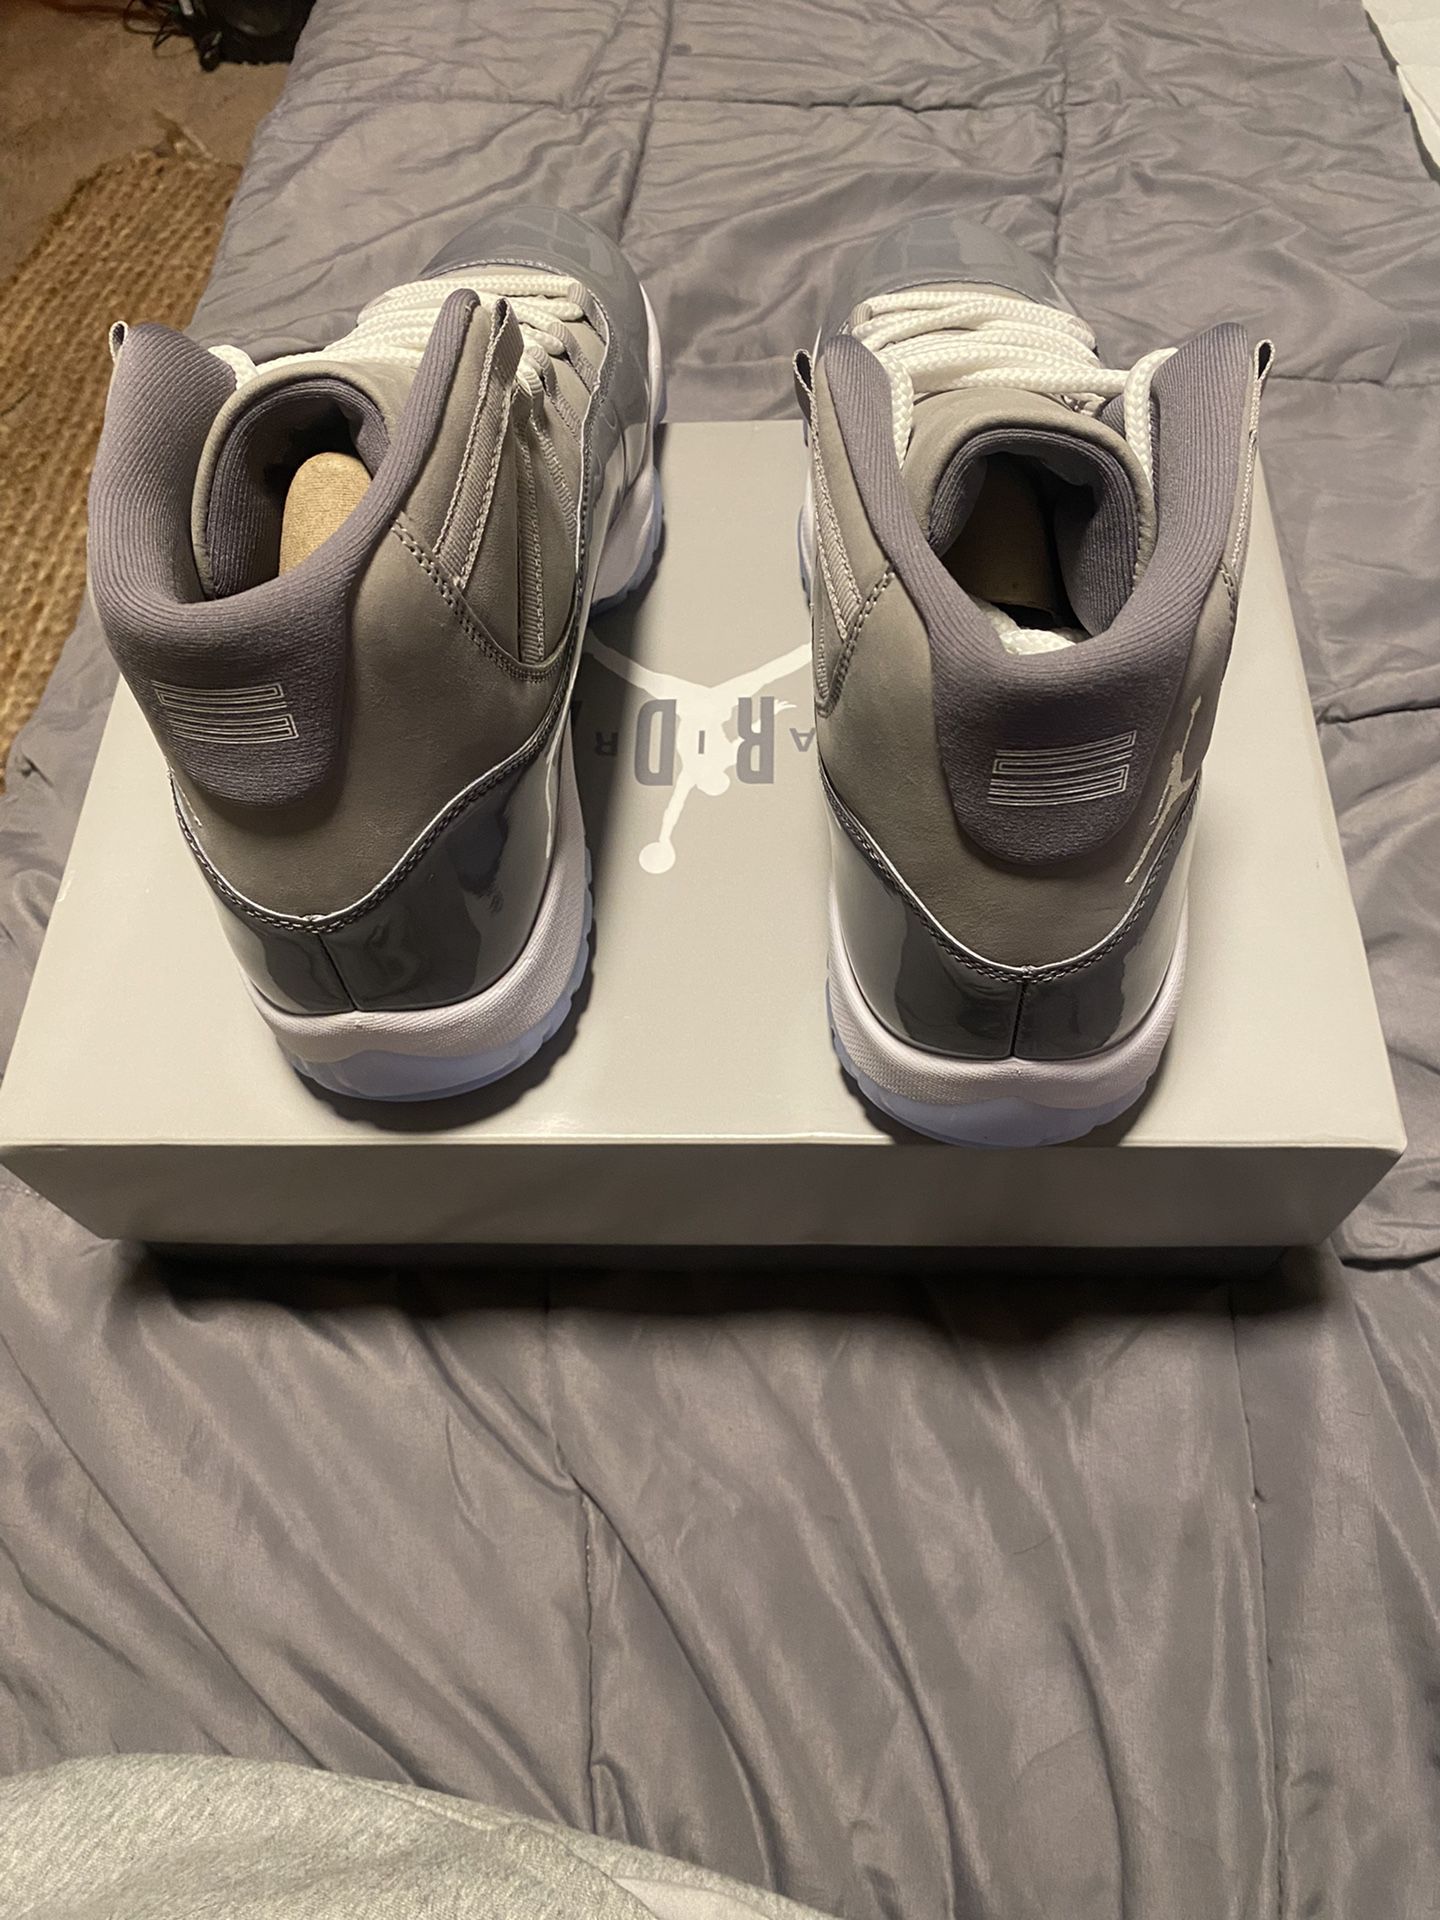 2021 Nike Retro Air Jordan Cool Grey 11 Size13